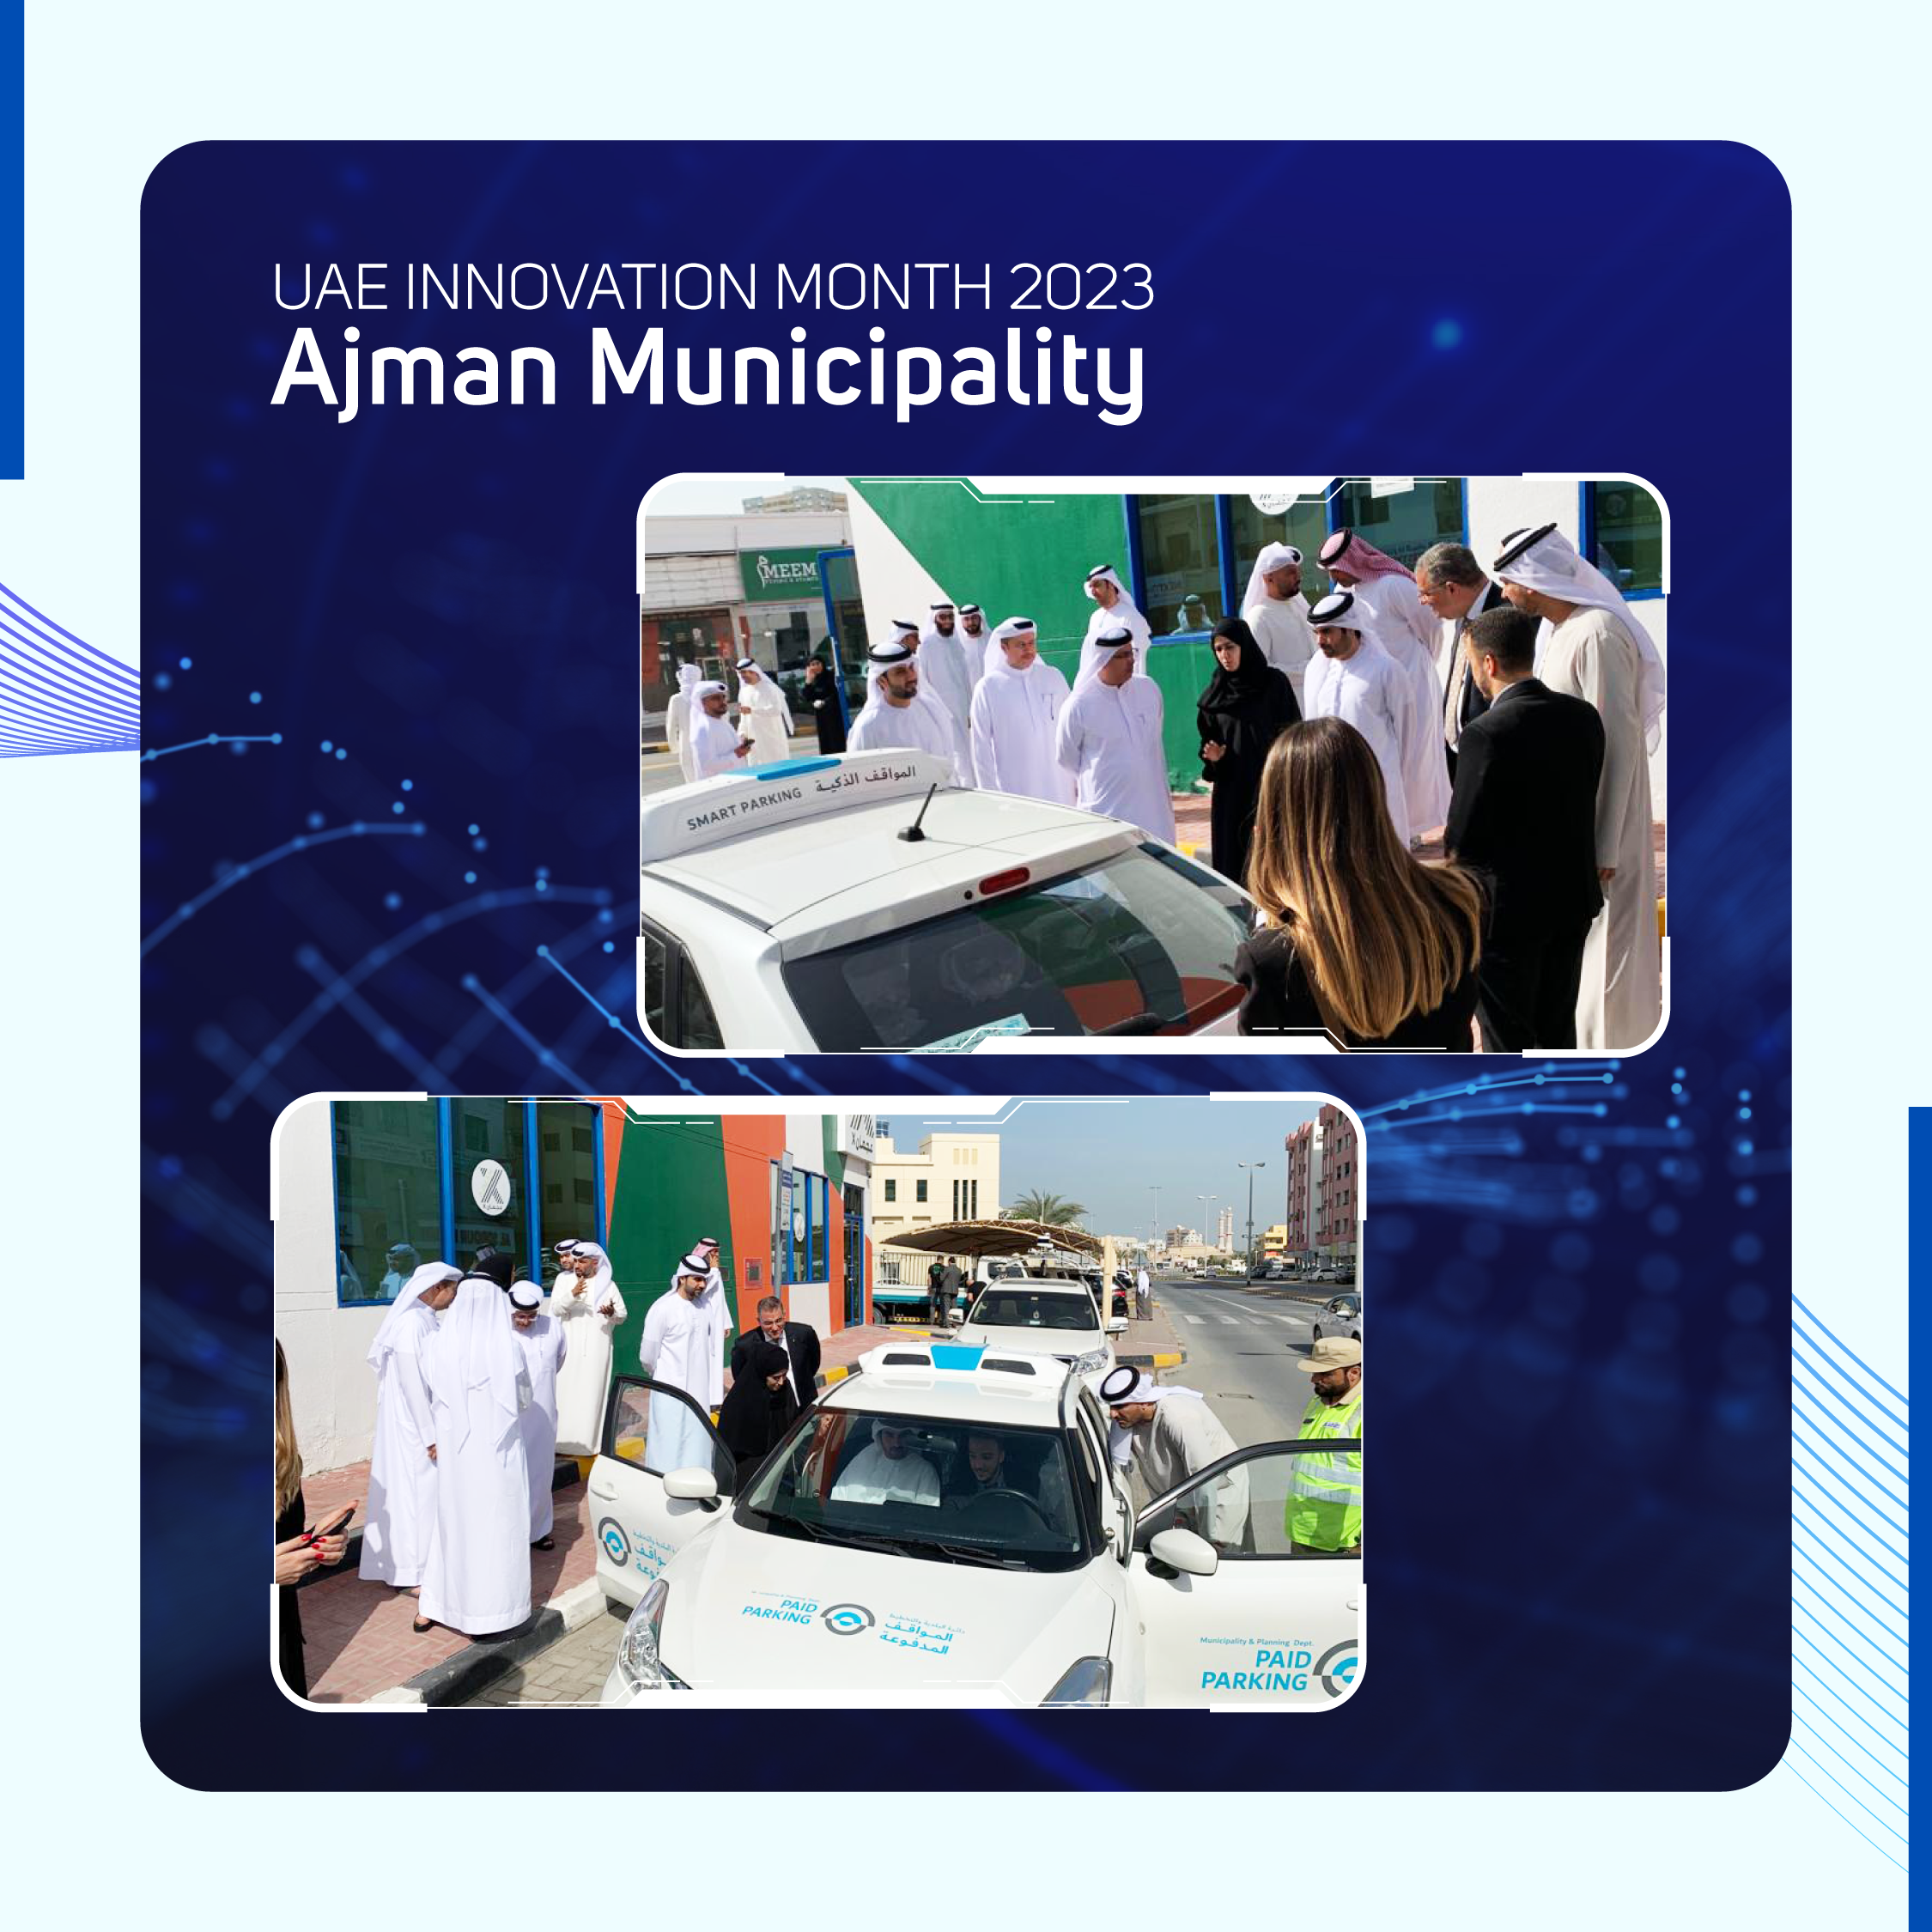 UAE Innovation Month 2023 - Ajman Municipality